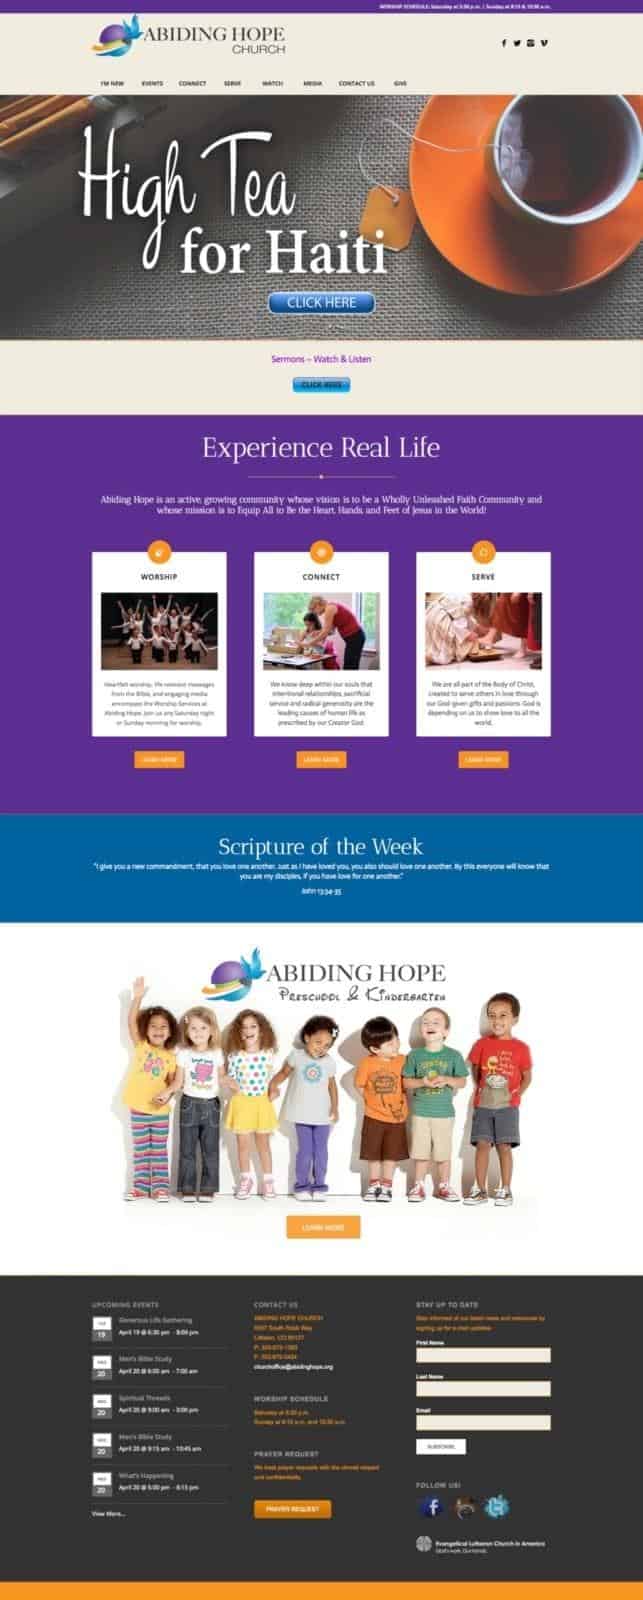 WOW Factor Digital Marketing Agency - Abiding Hope Website